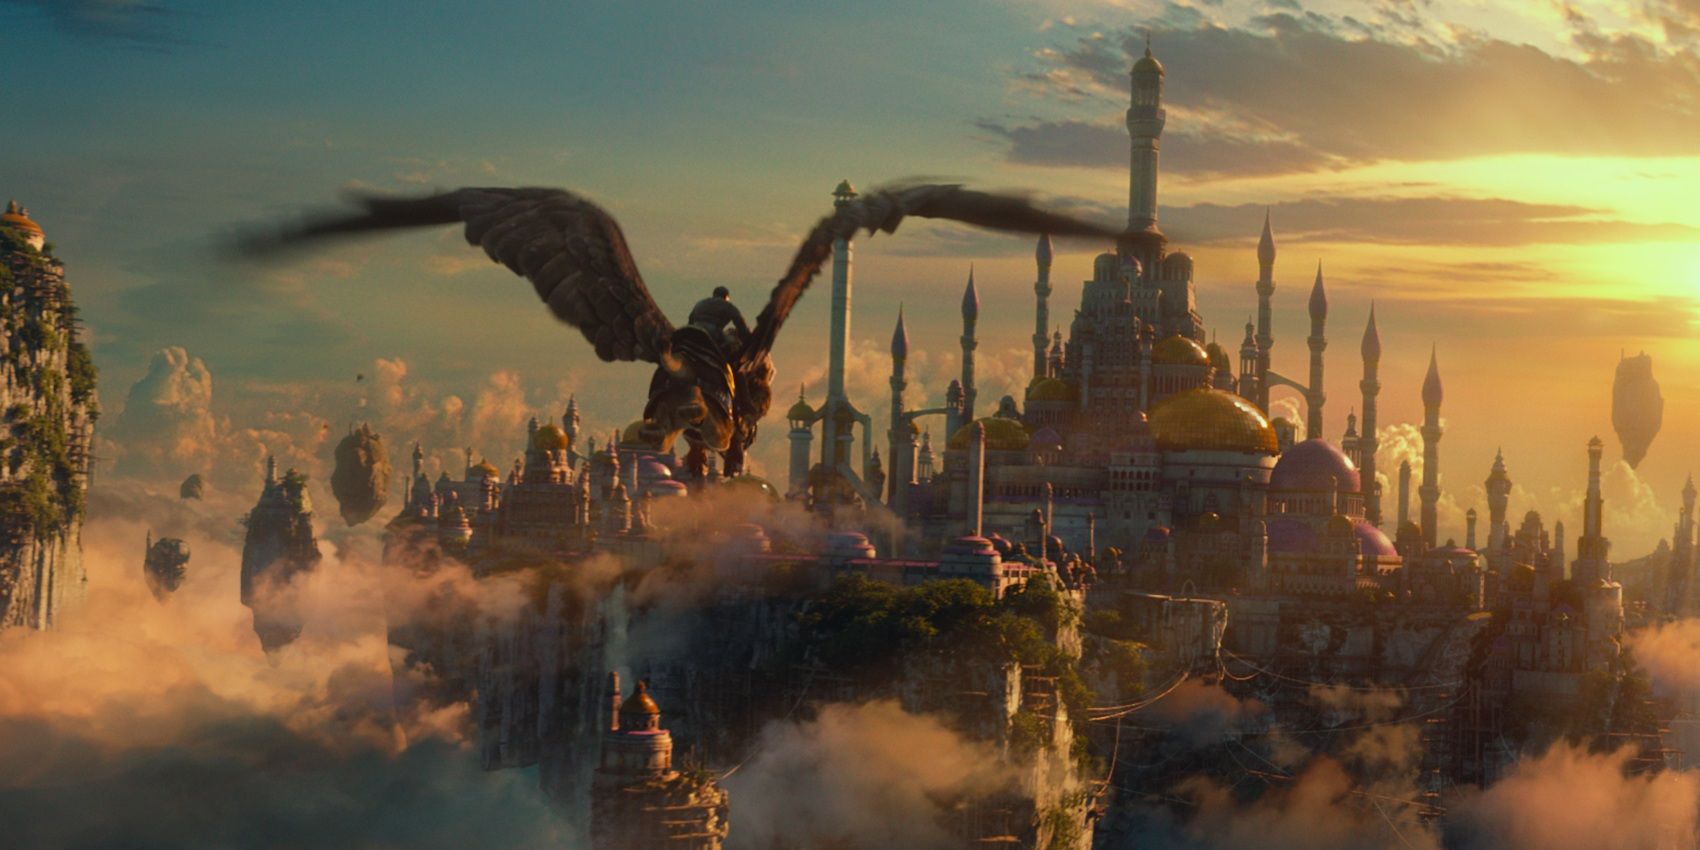 Milžiniškas paukštis, skrendantis virš karalystės filme „Warcraft“.